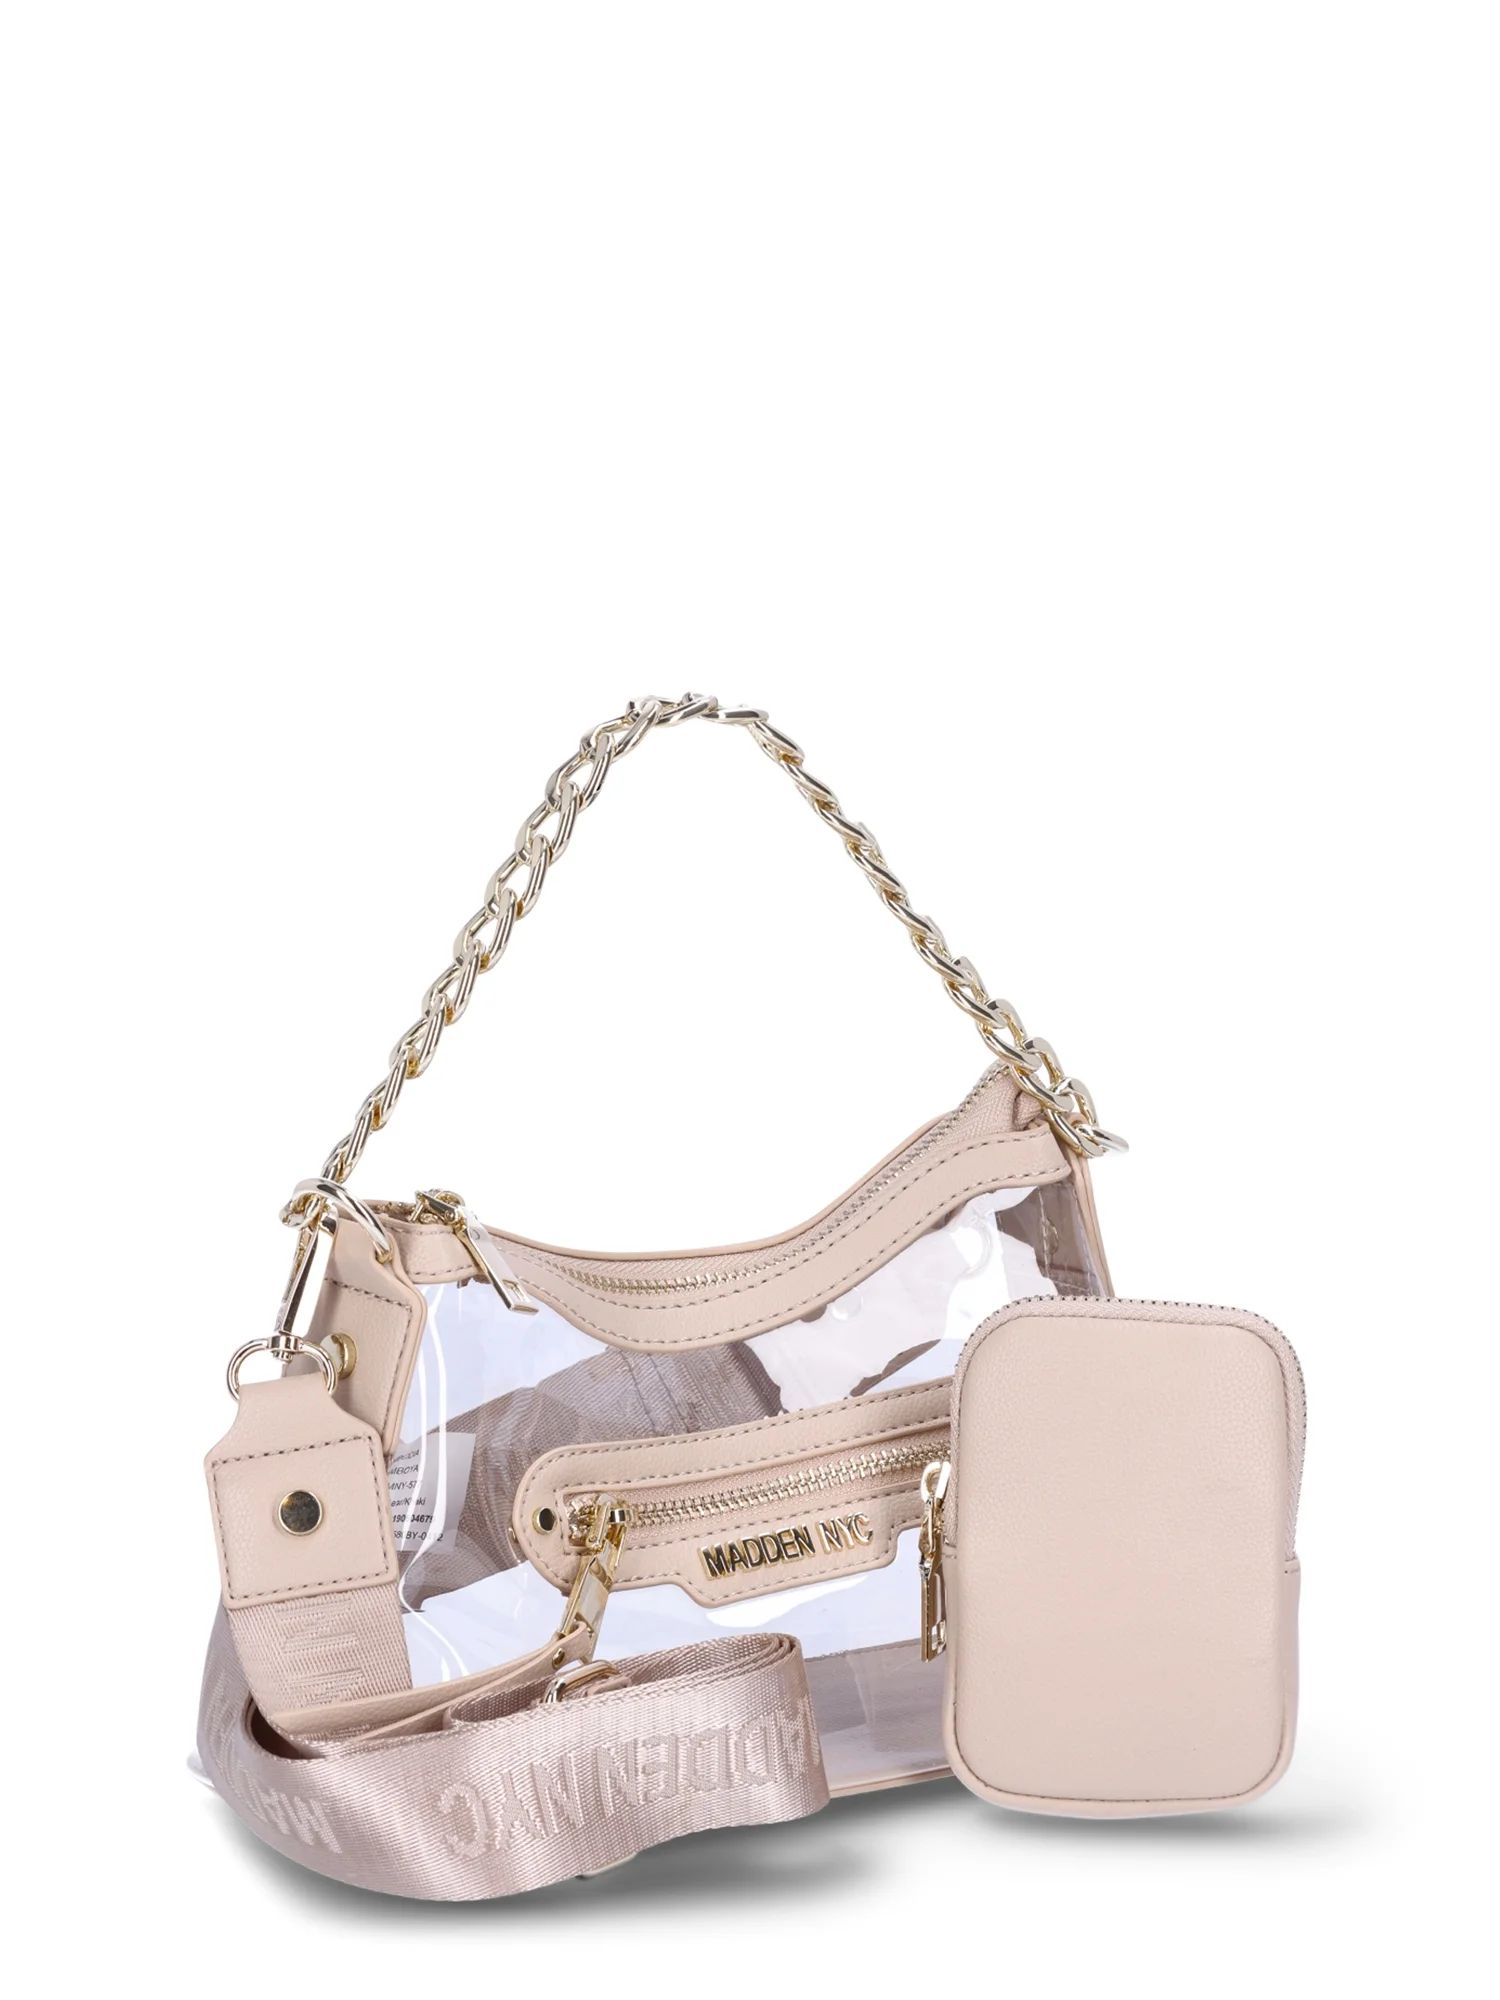 Madden NYC Women’s Clear Hobo Crossbody Handbag with Chain, Khaki | Walmart (US)